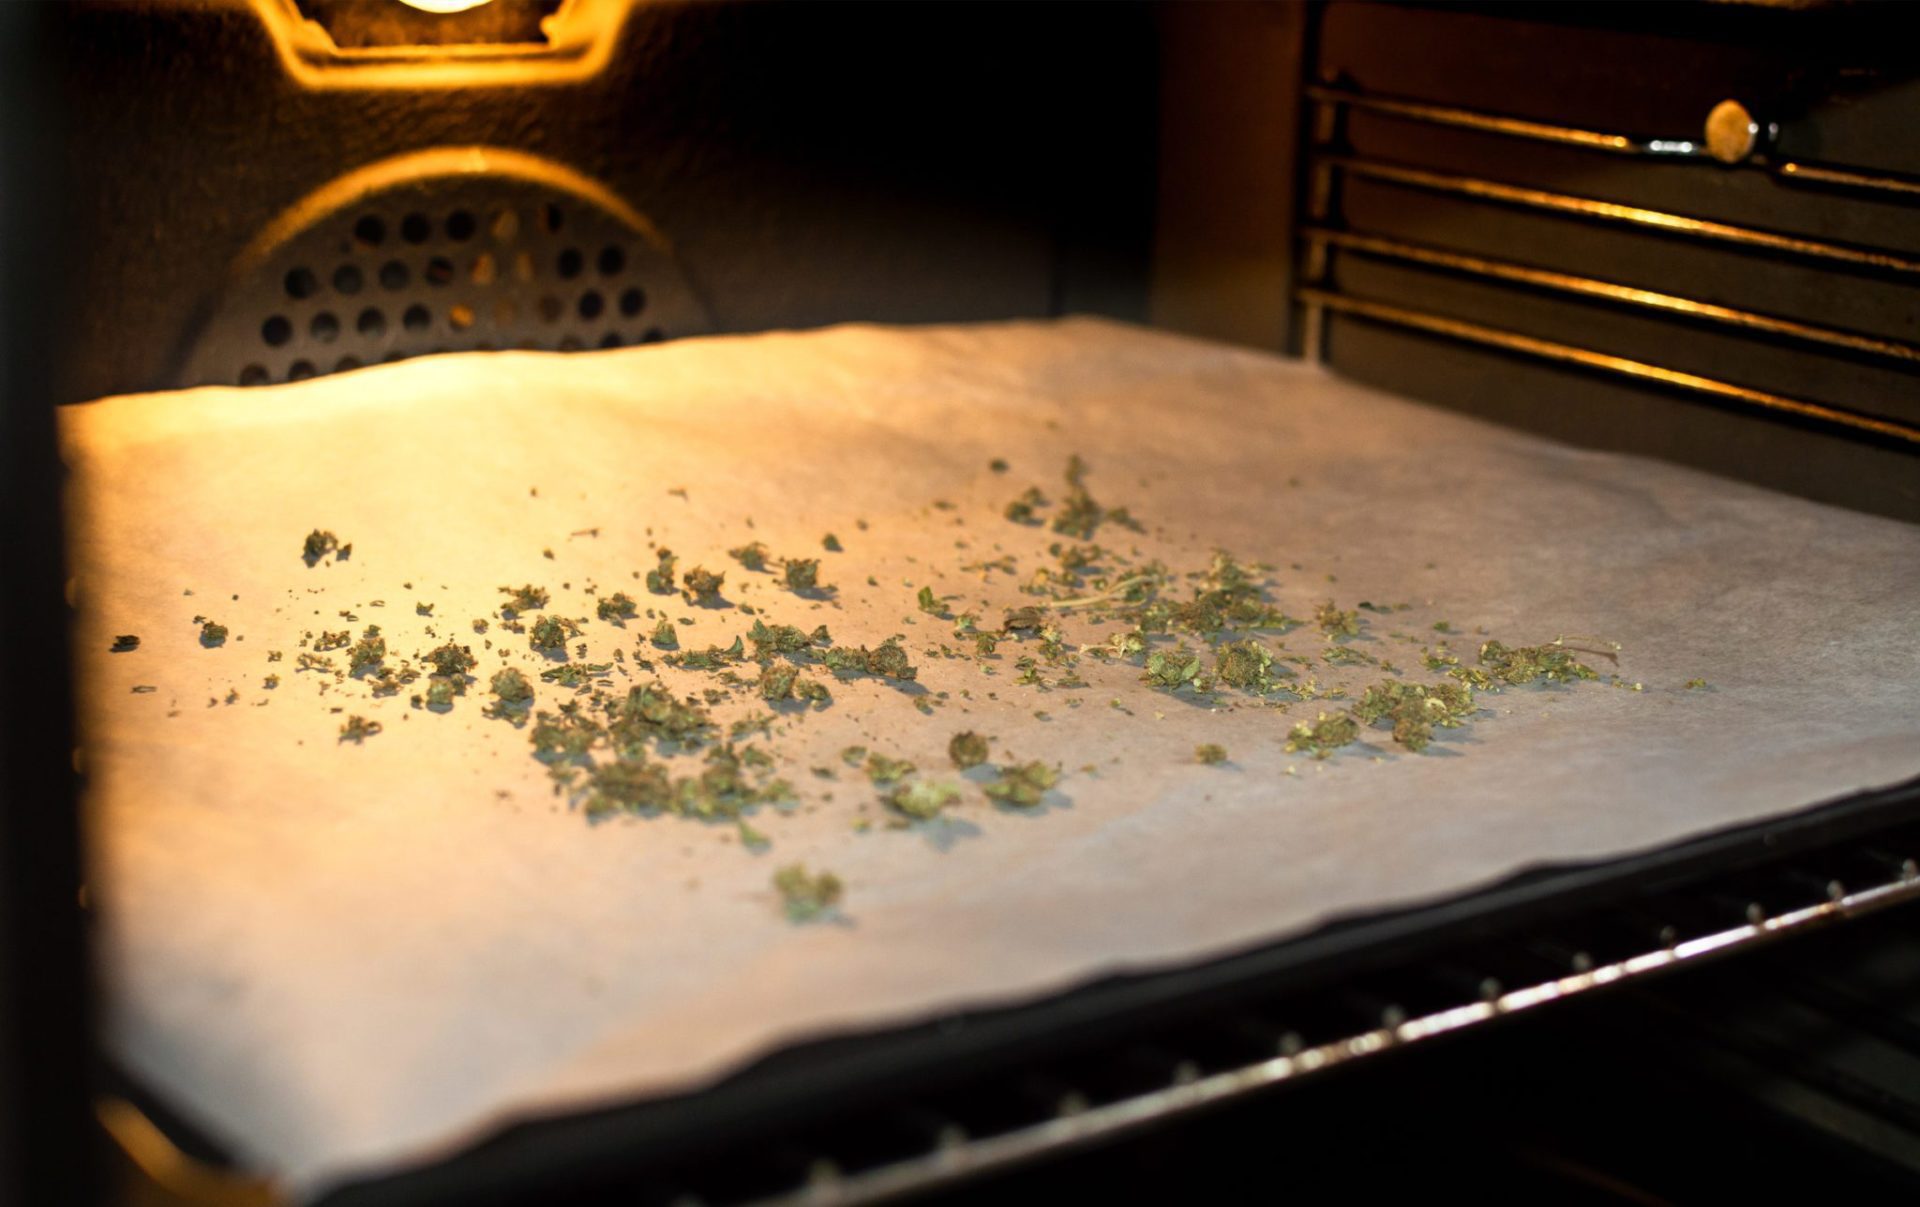 proceso de descarboxilación - calentar el cannabis crudo dentro de un horno